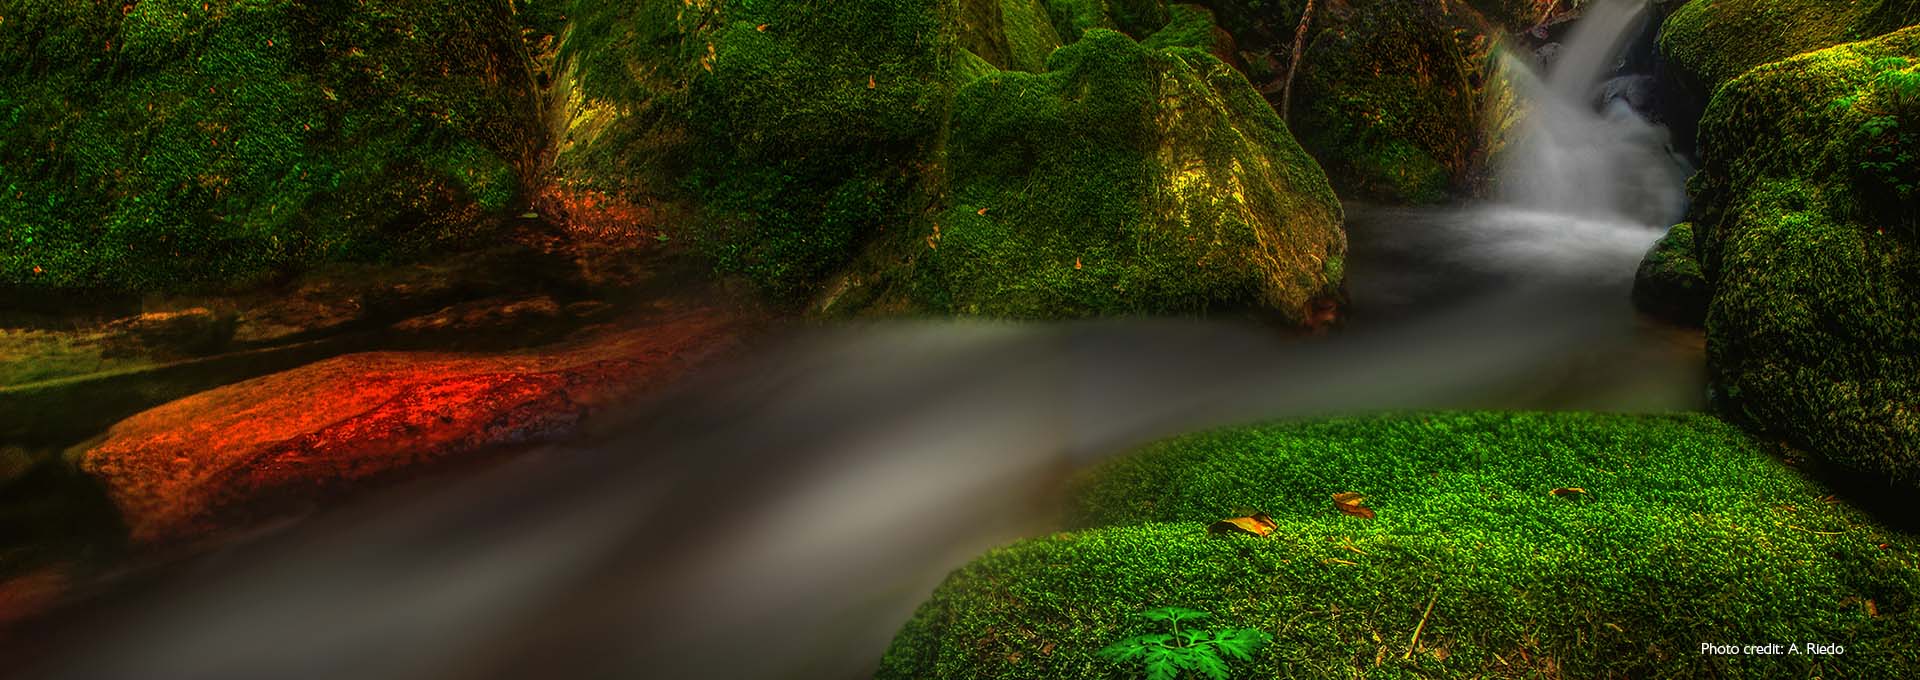 Imagen de un pequeño arroyo entre rocas cubiertas de musgo, fotografiada por usuarios de audífonos Bernafon Alpha 